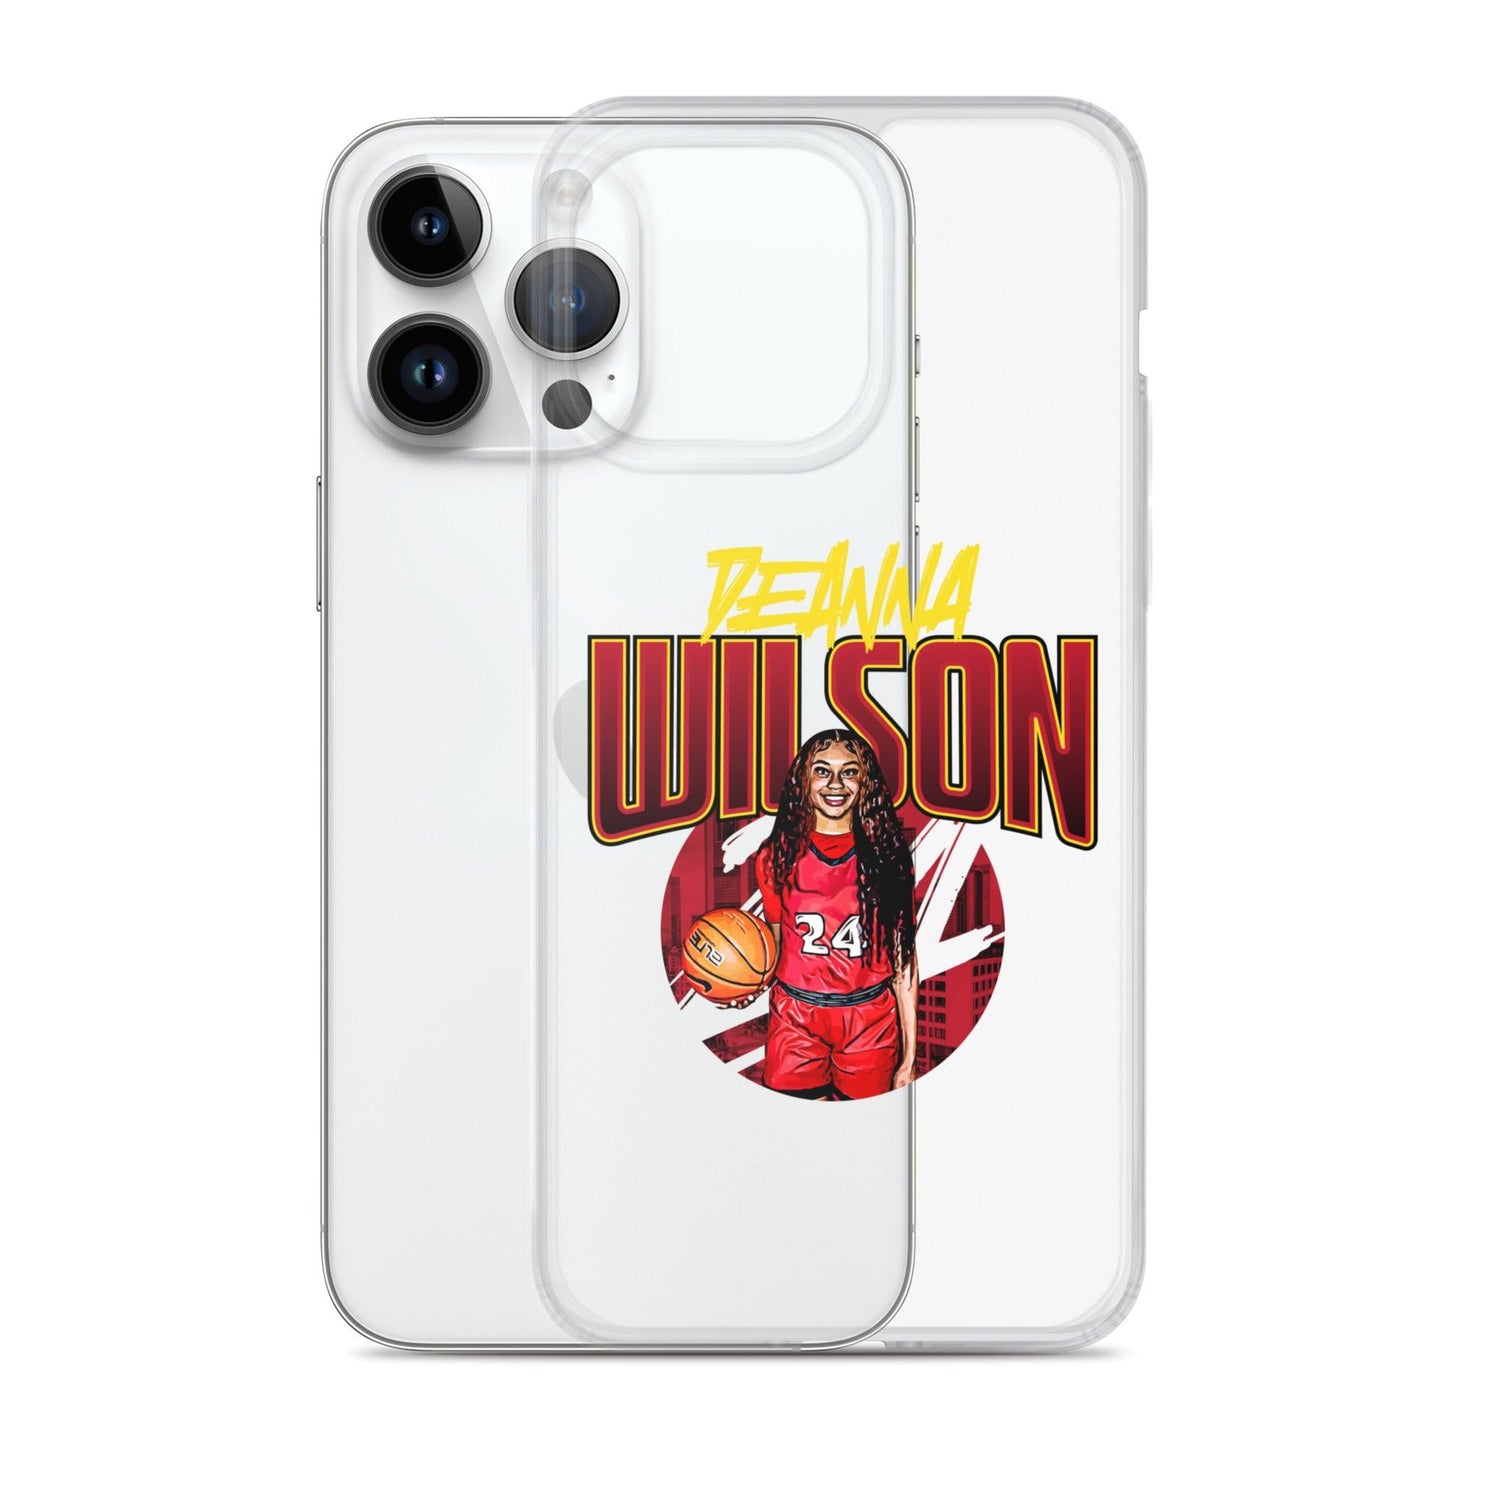 DeAnna Wilson "Gameday" iPhone Case - Fan Arch